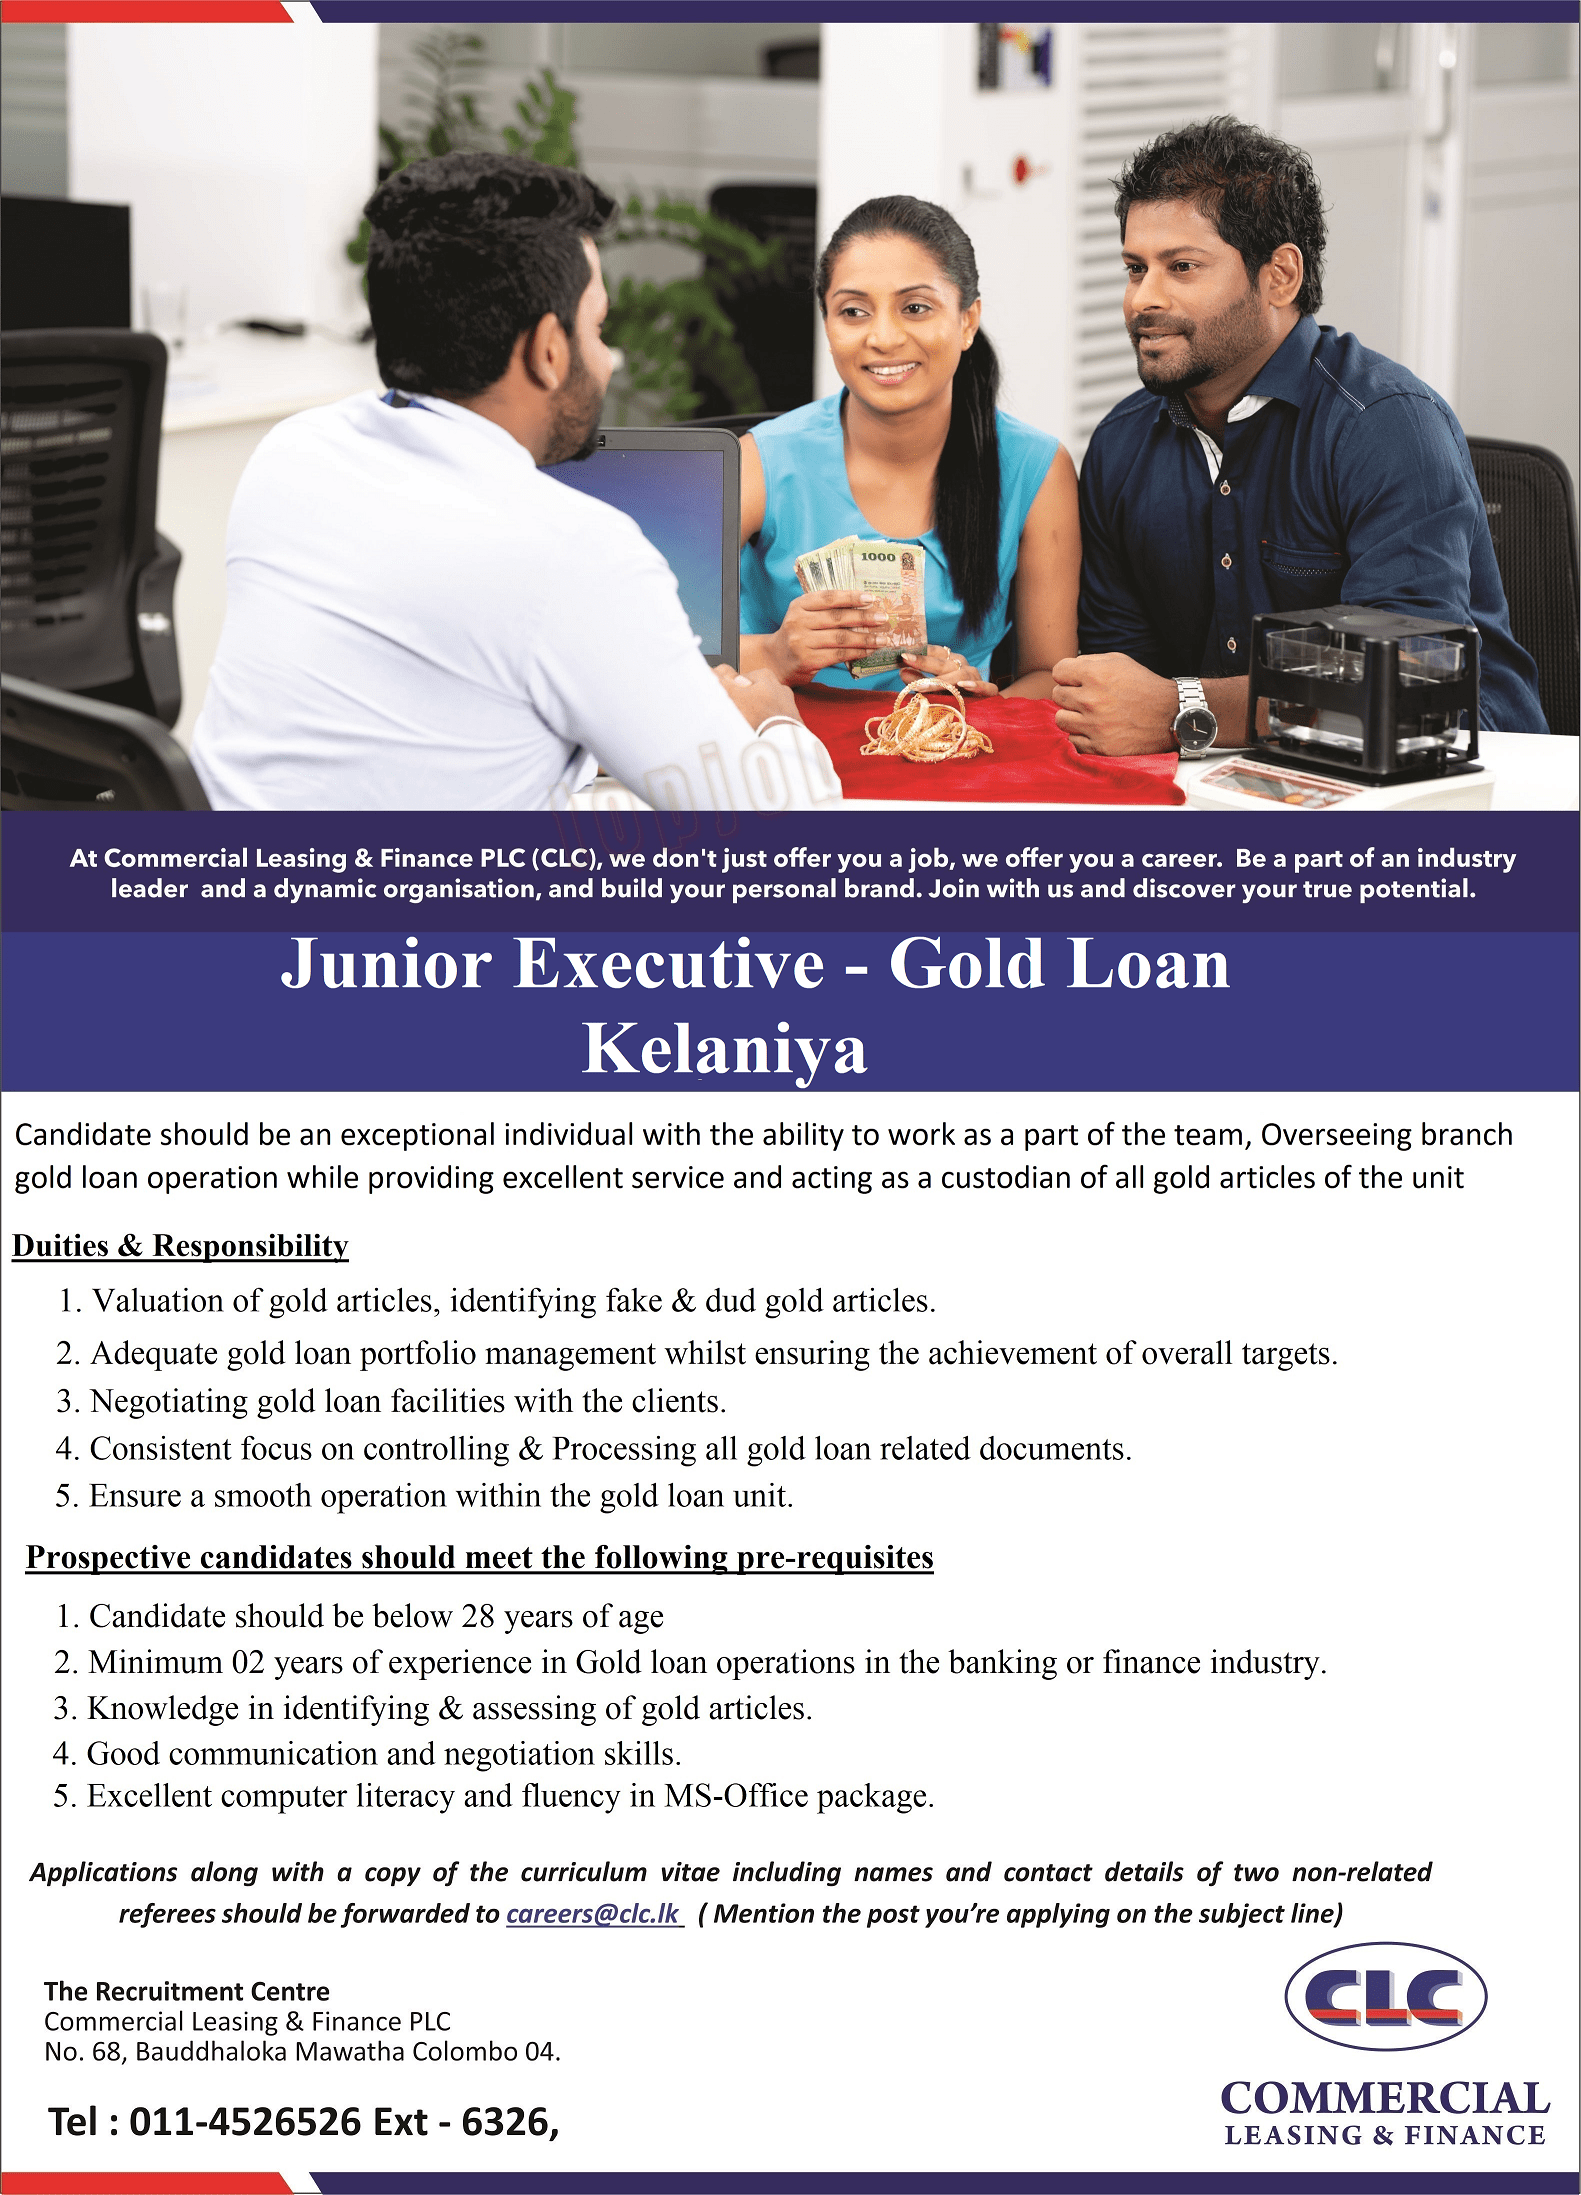 Junior Executive - Gold Loan (Kelaniya) - Commercial Leasing & Finance Jobs Vacancies